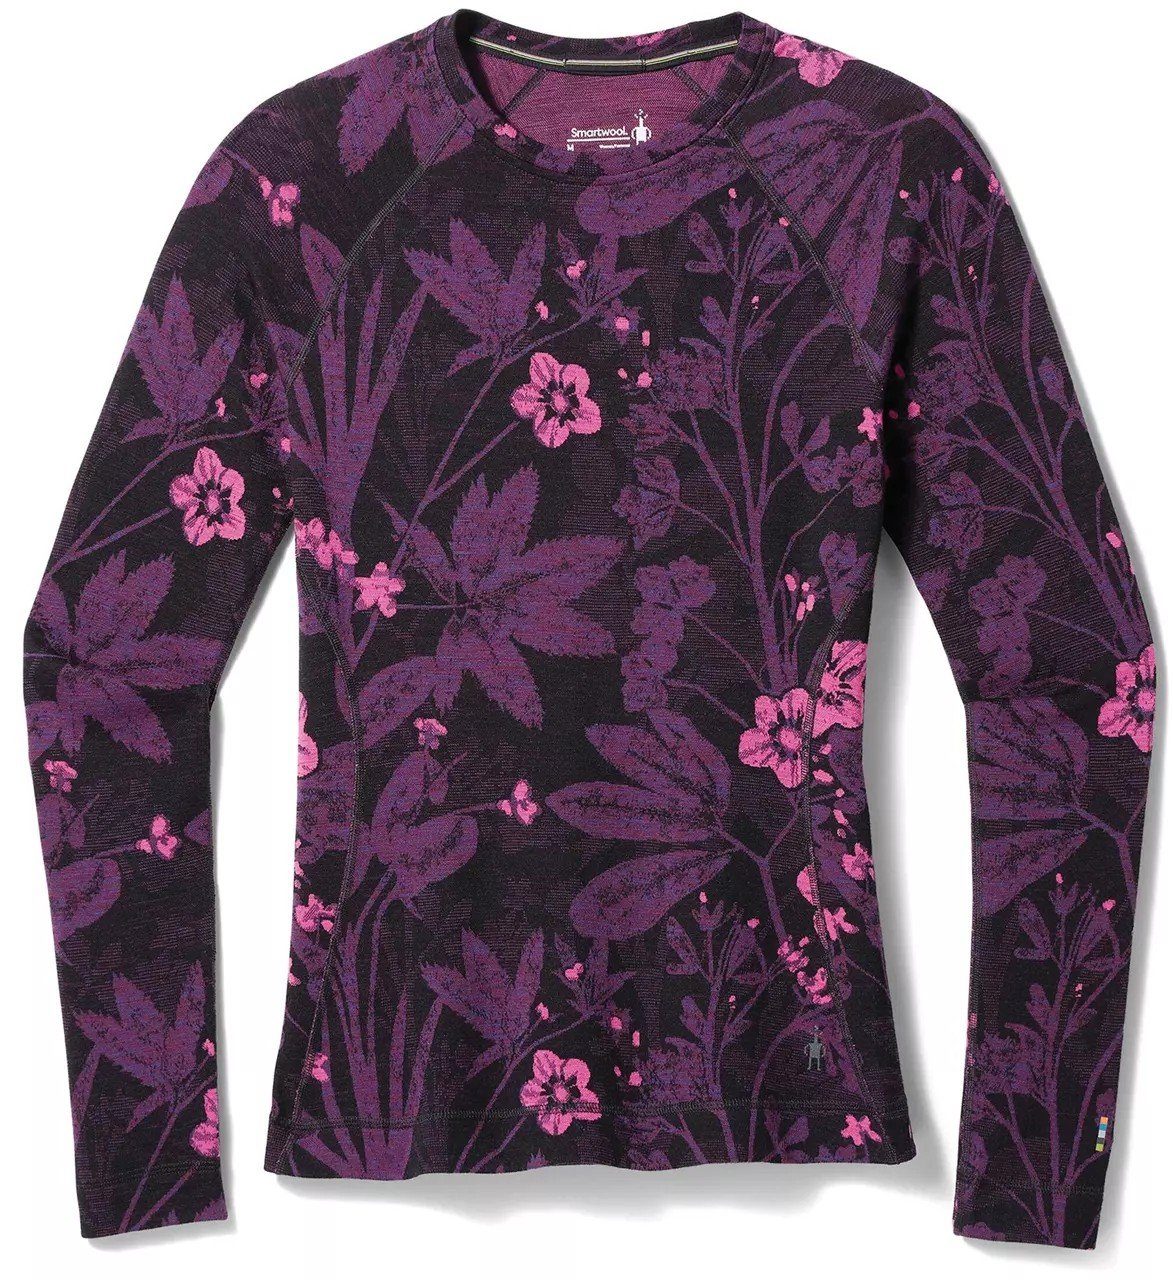 Trangia Funktionsunterhemd Classic Thermal Crew Women purple iris floral | Funktionsunterhemden